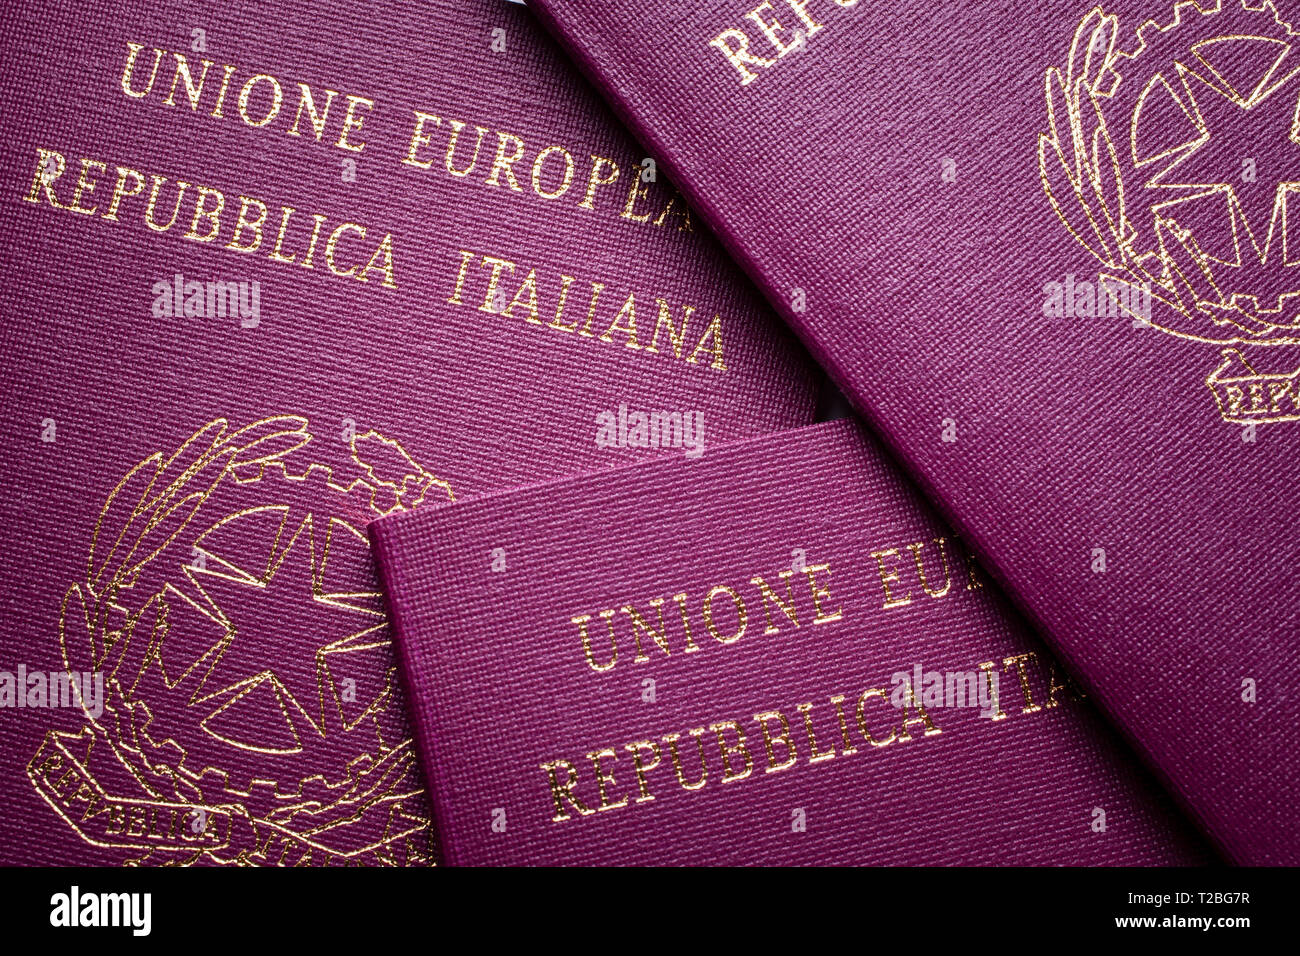 italian passports close up Stock Photo